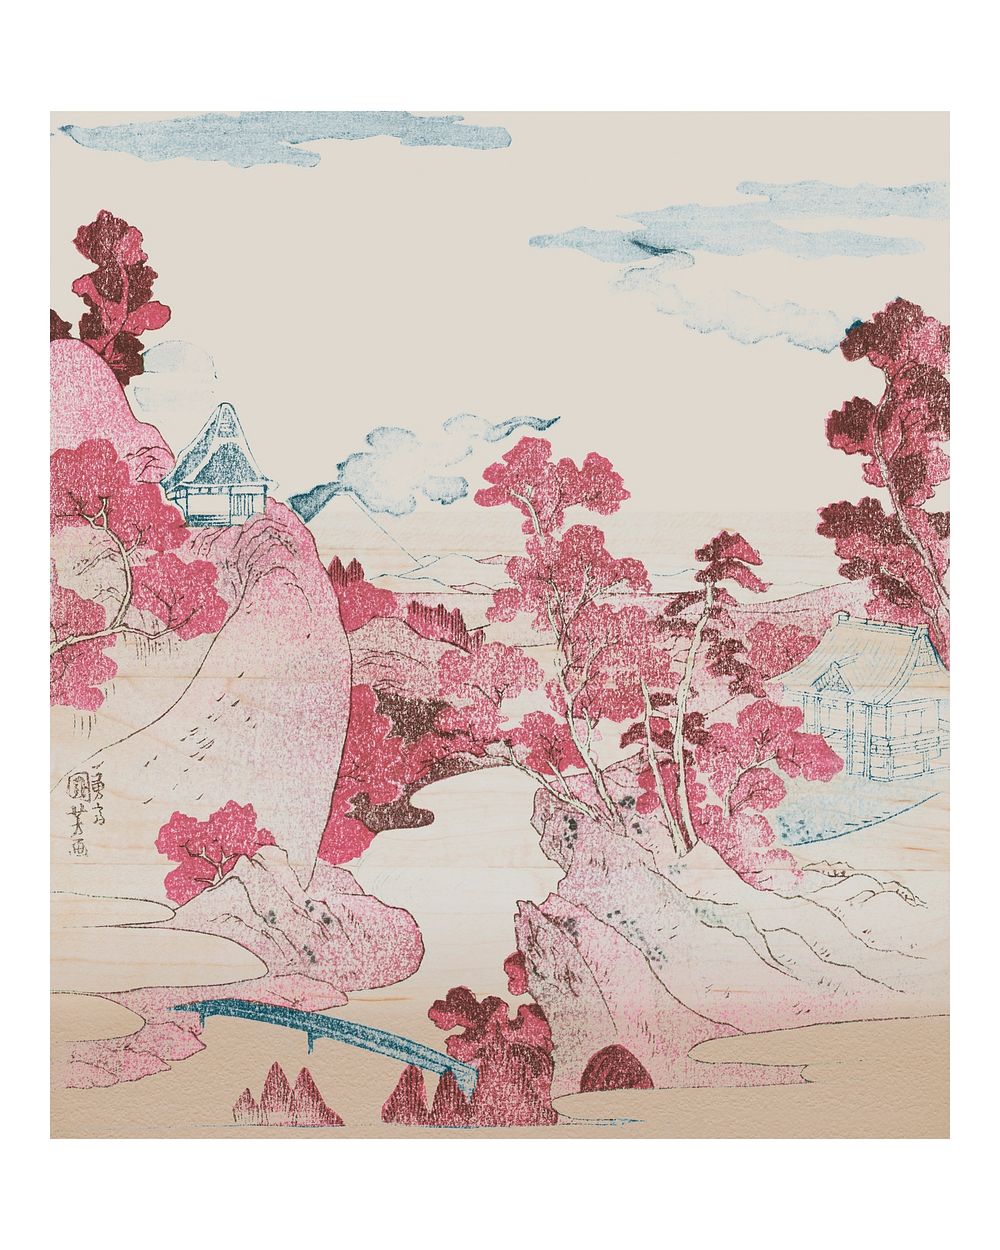 Valley in Mount Fuji vintage illustration, wall art print and poster. Remix from original painting by Utagawa Kuniyoshi.